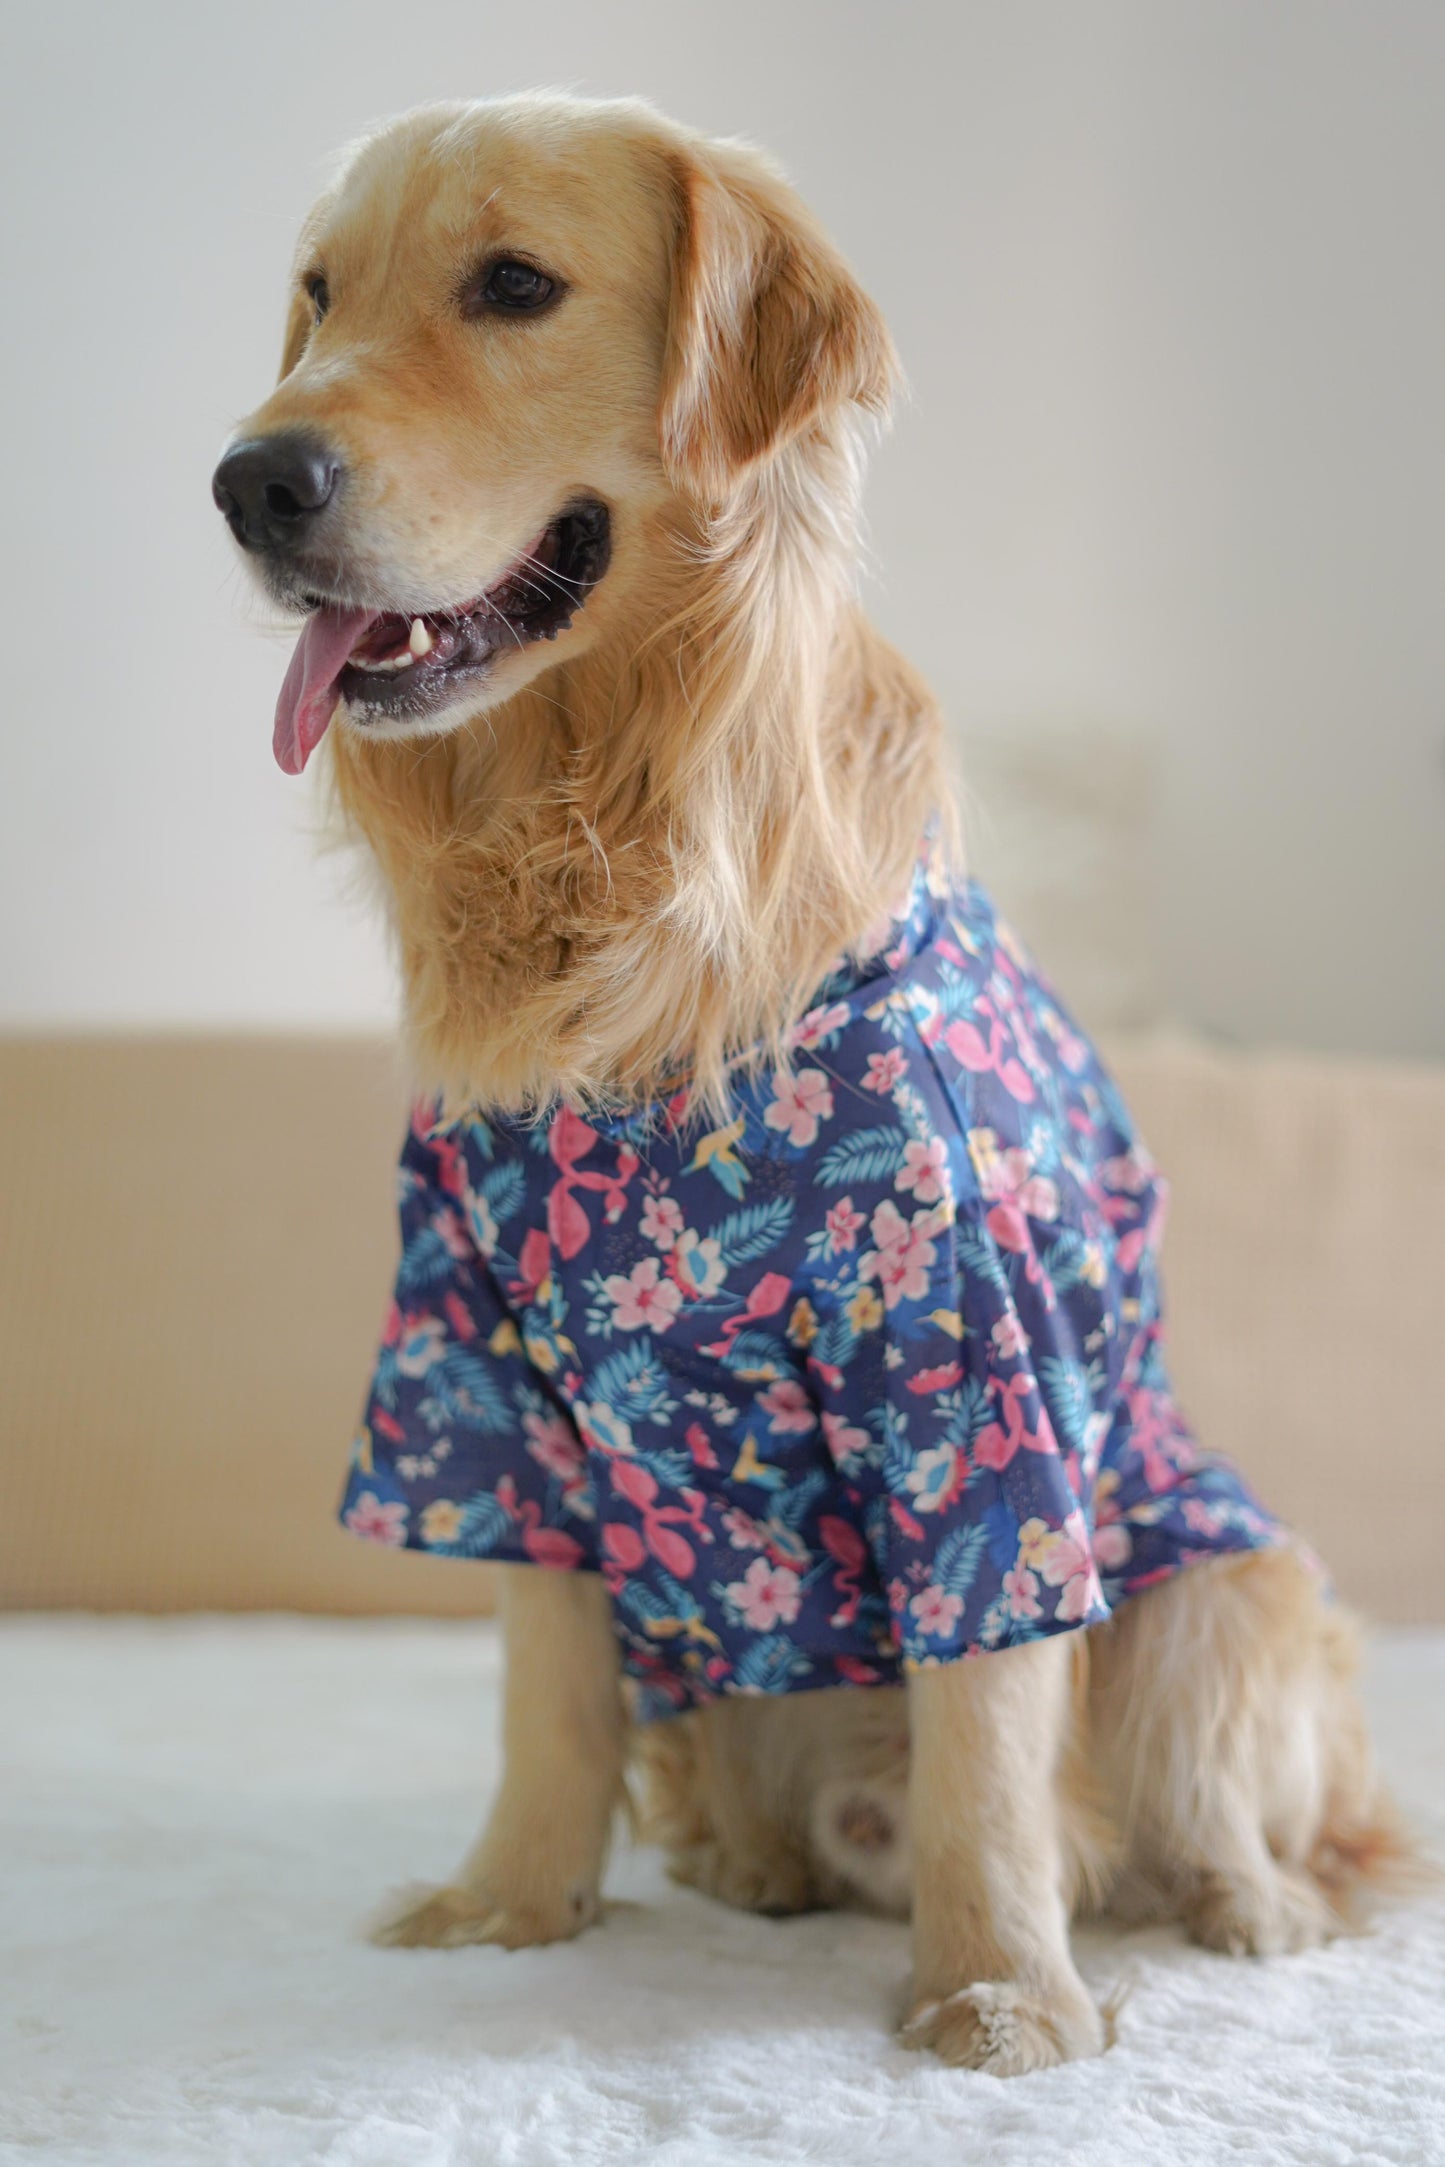 Unisex Quirky Shirt for Human + Dog Shirt Twinning set